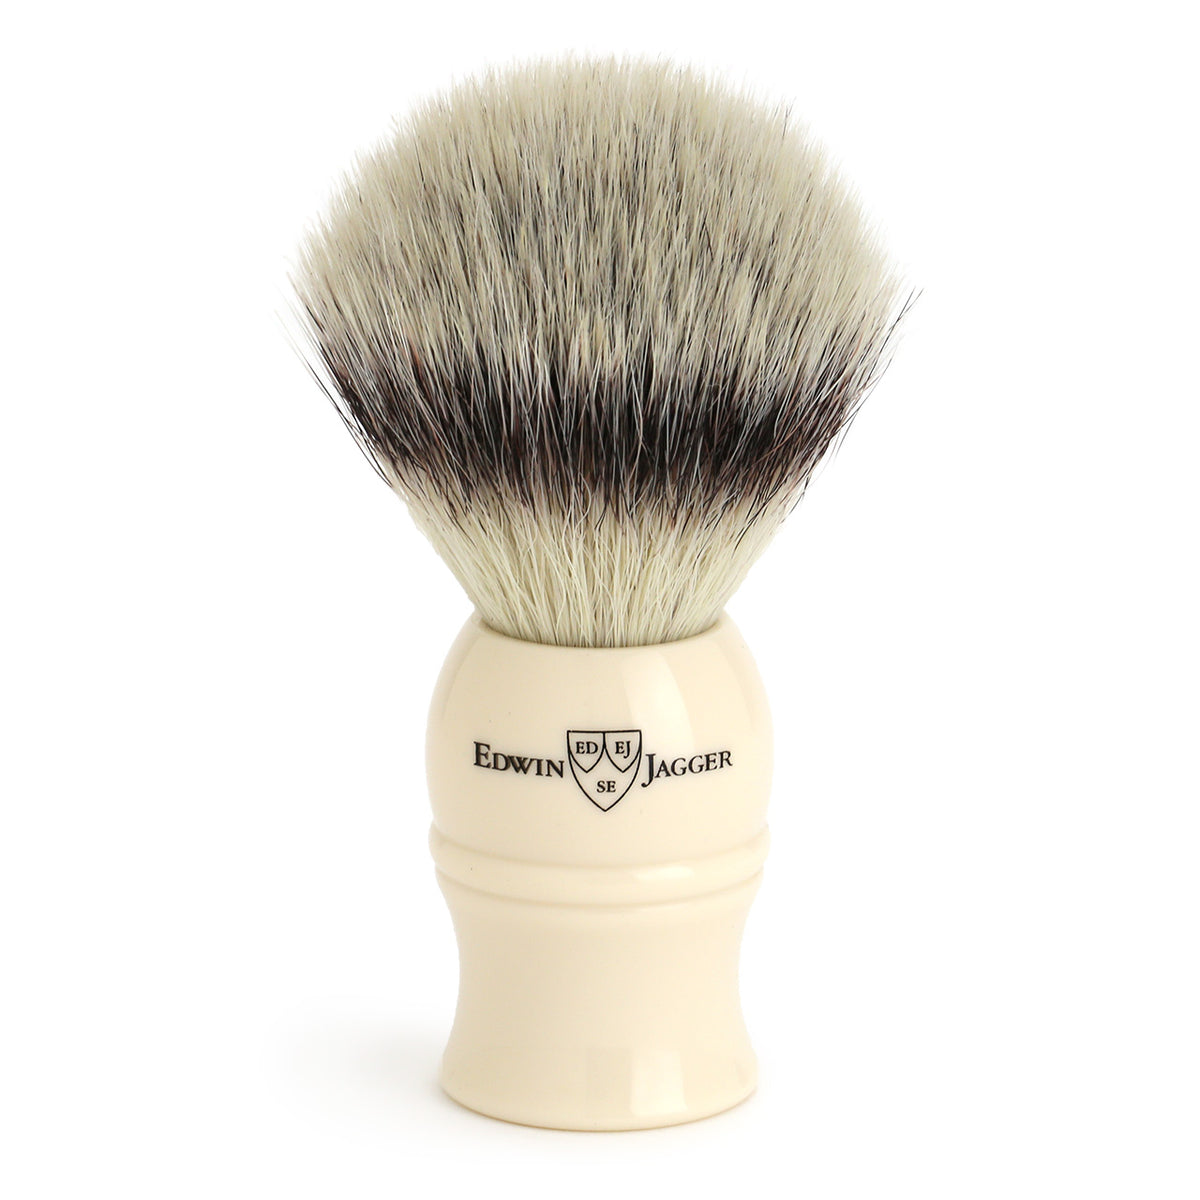 Edwin Jagger High Quality Cruelty-Free Shaving Brush - Imitation Ivory